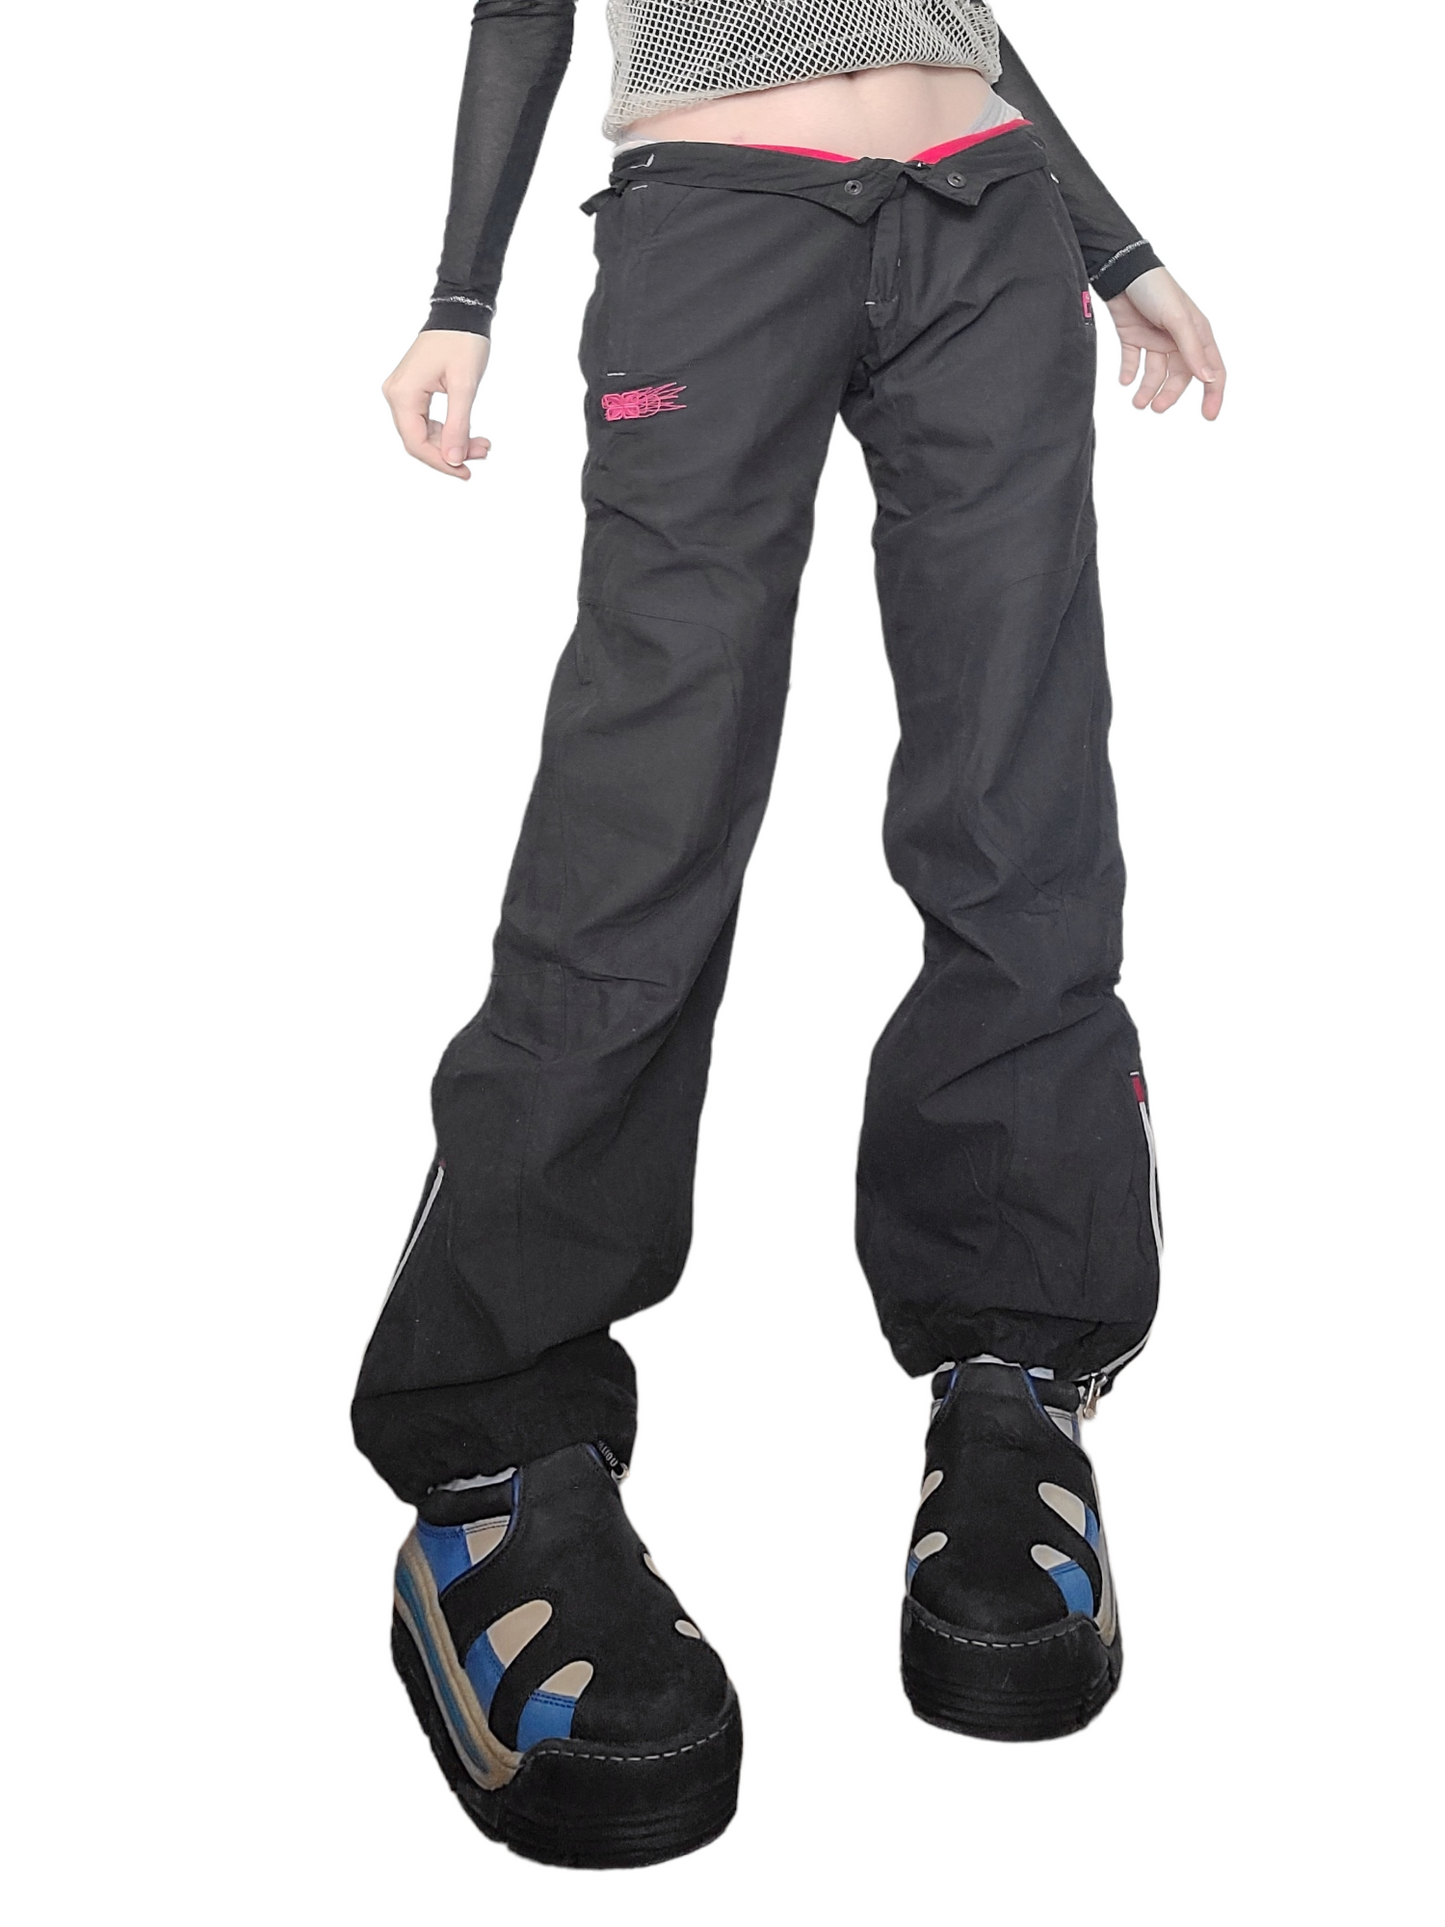 Cargo parachute pants gorpcore skater techwear sportwear 90s kaki grunge utility 